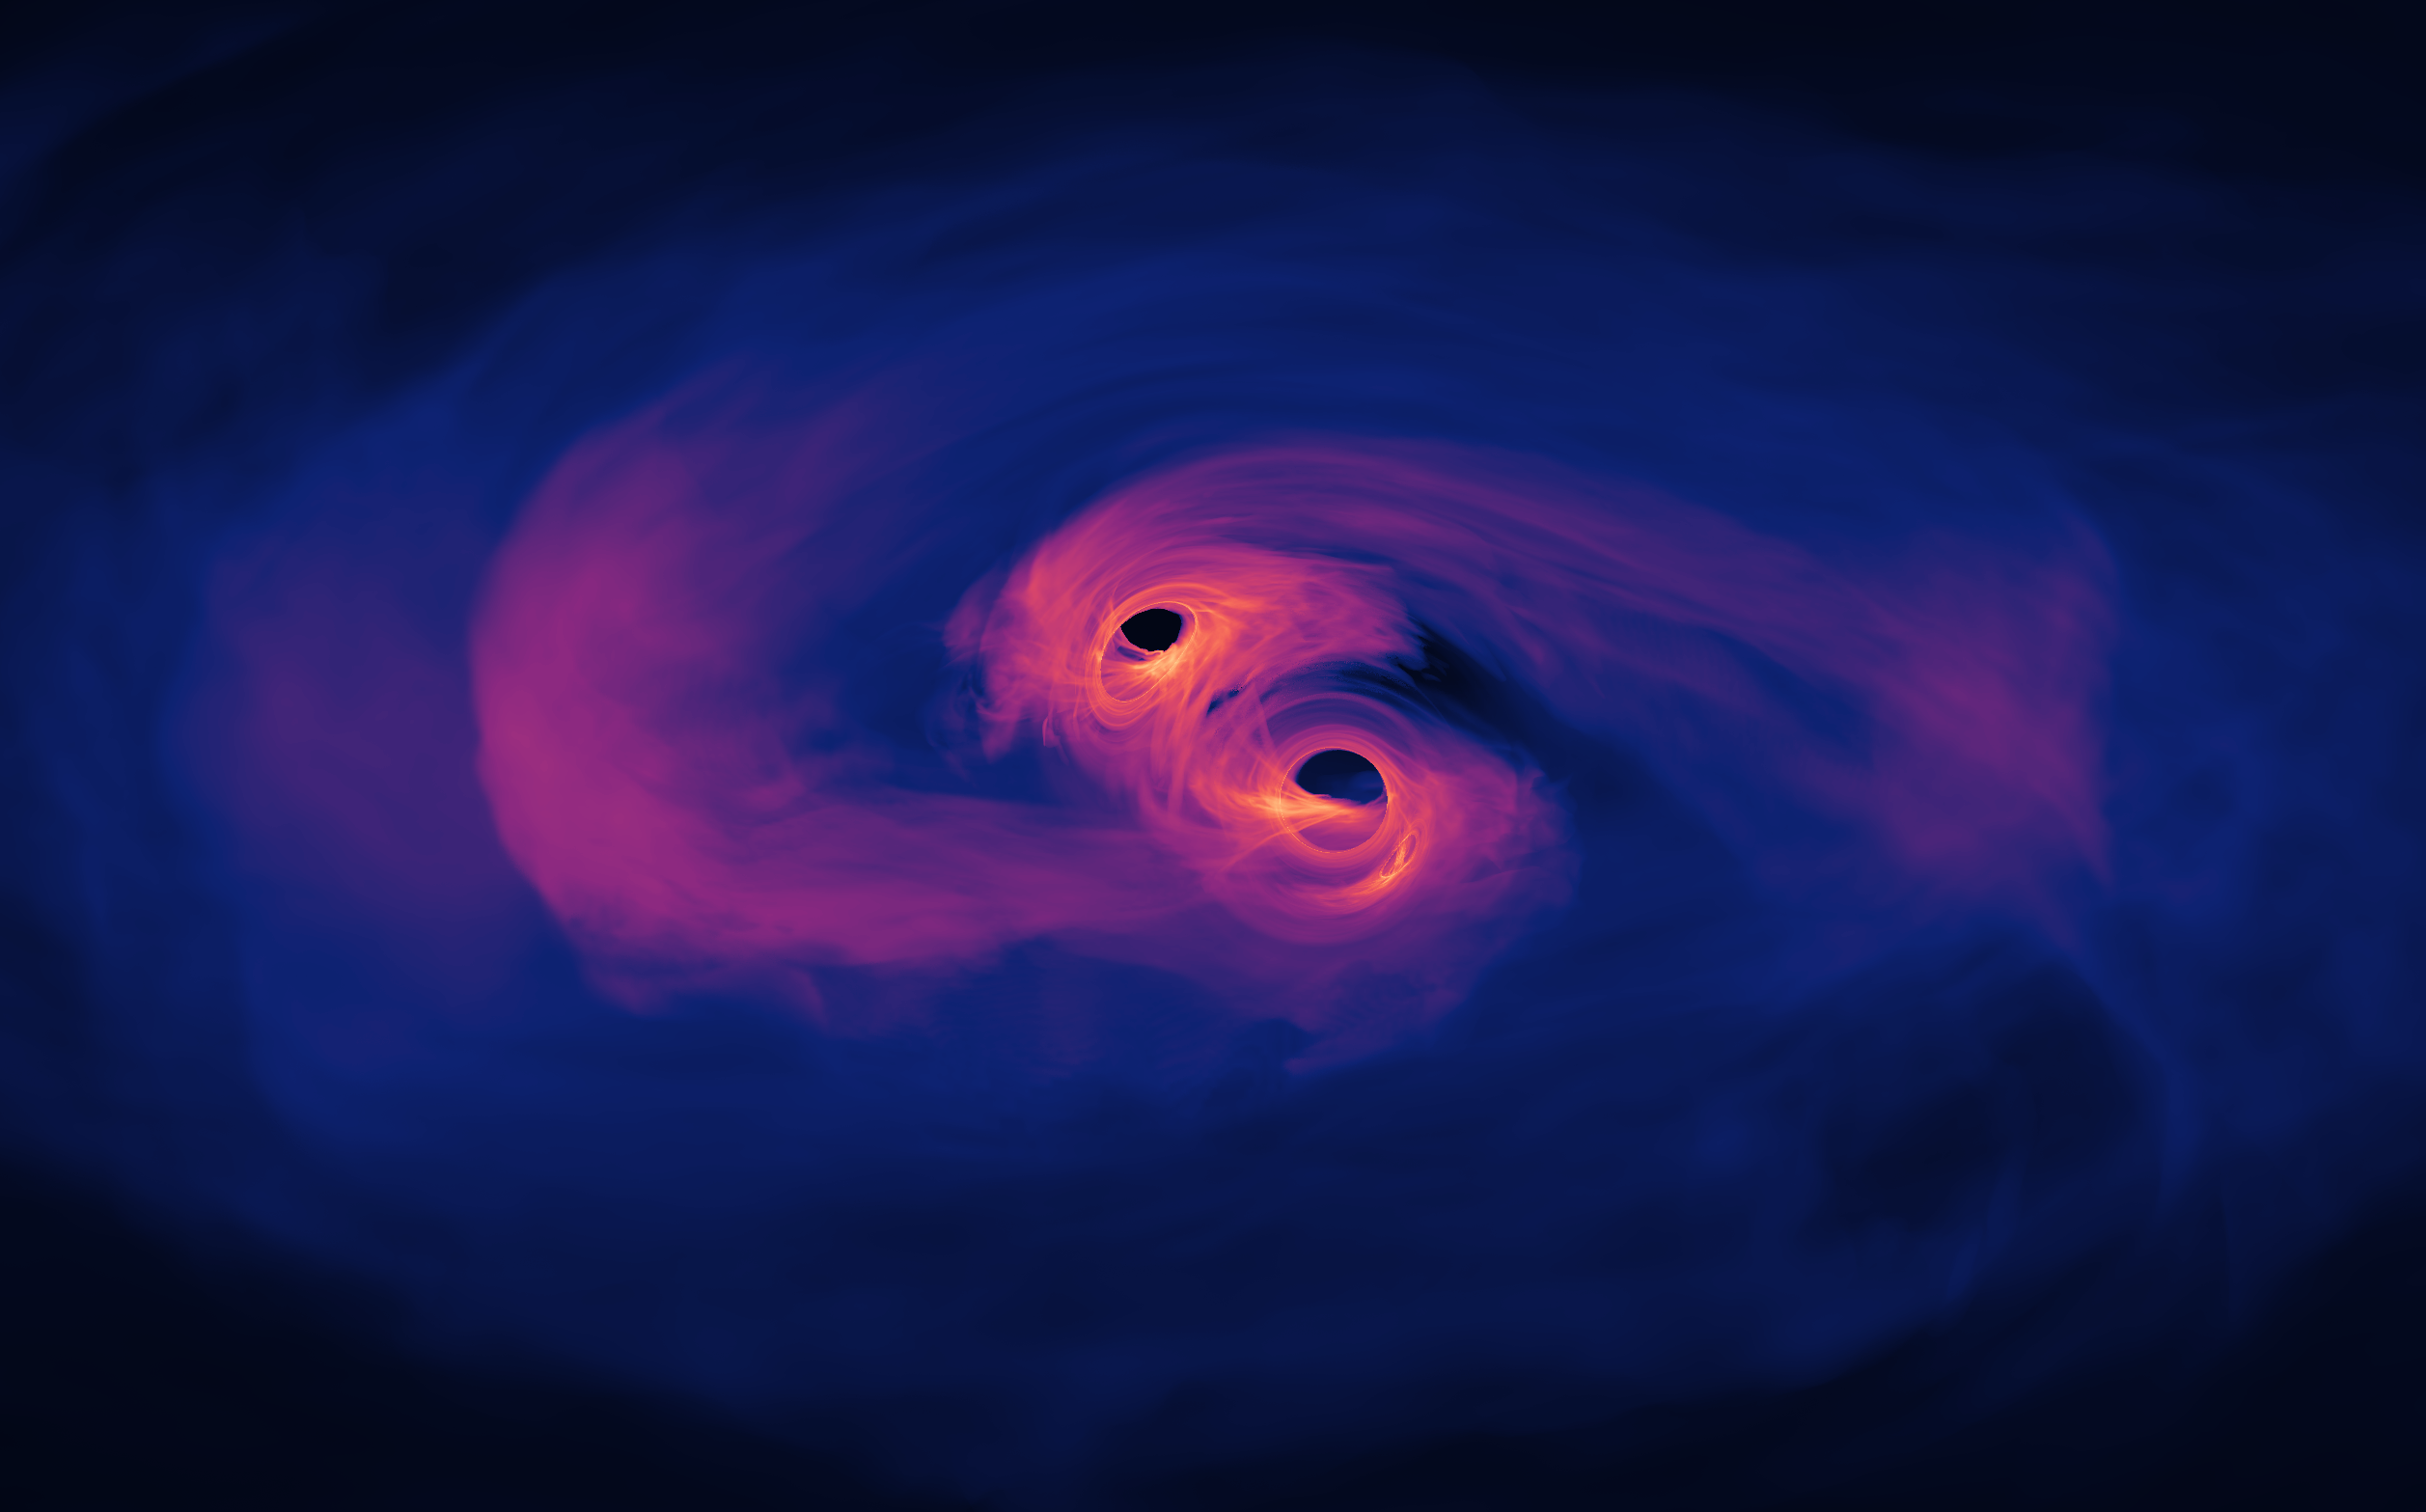 Black hole merger simulation of gravitational waves